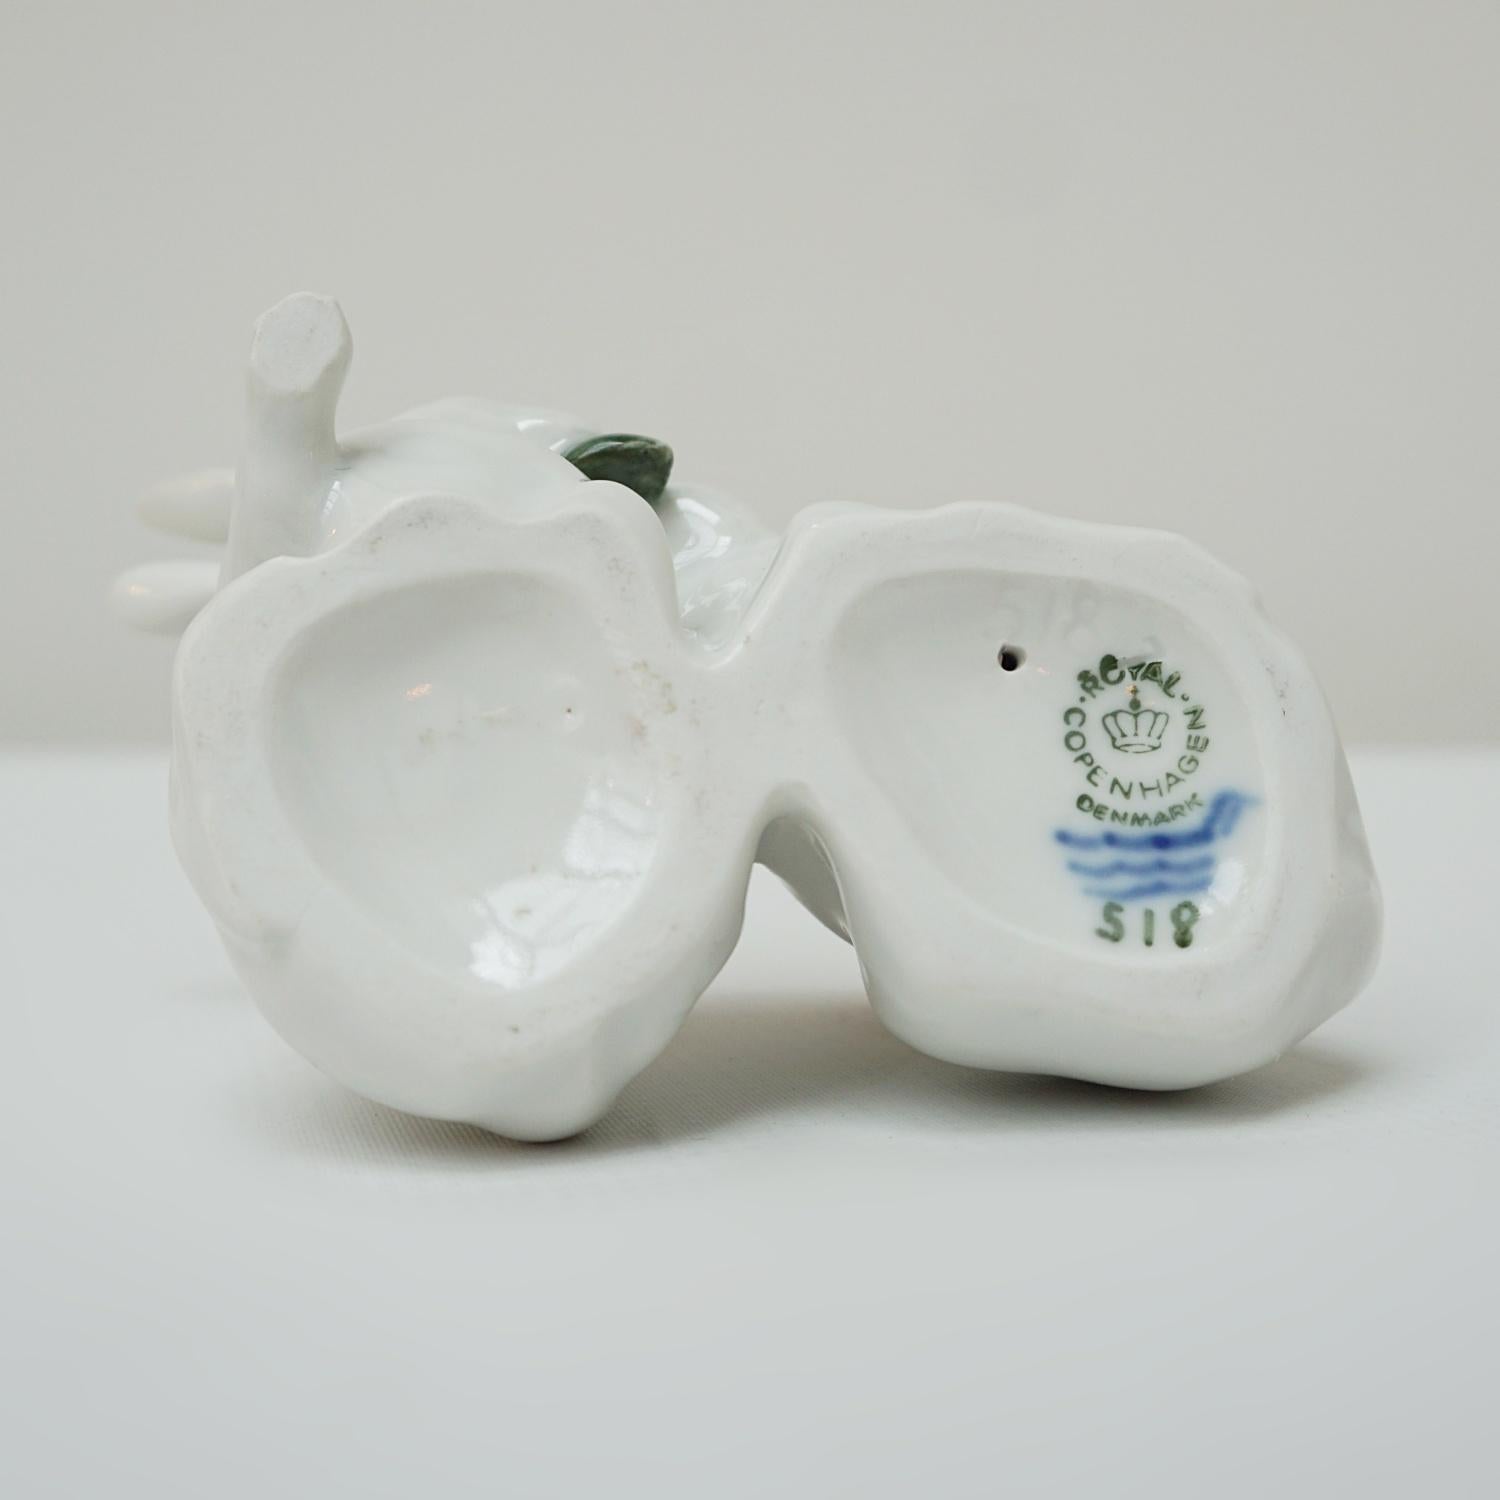 A porcelain gloss finished figurine of two rabbits designed by Arnold Krog for Royal Copenhagen.

Dimensions: H 6cm W 11cm D 6cm

Origin: Danish

Date: 1923

Item Number: 0407232